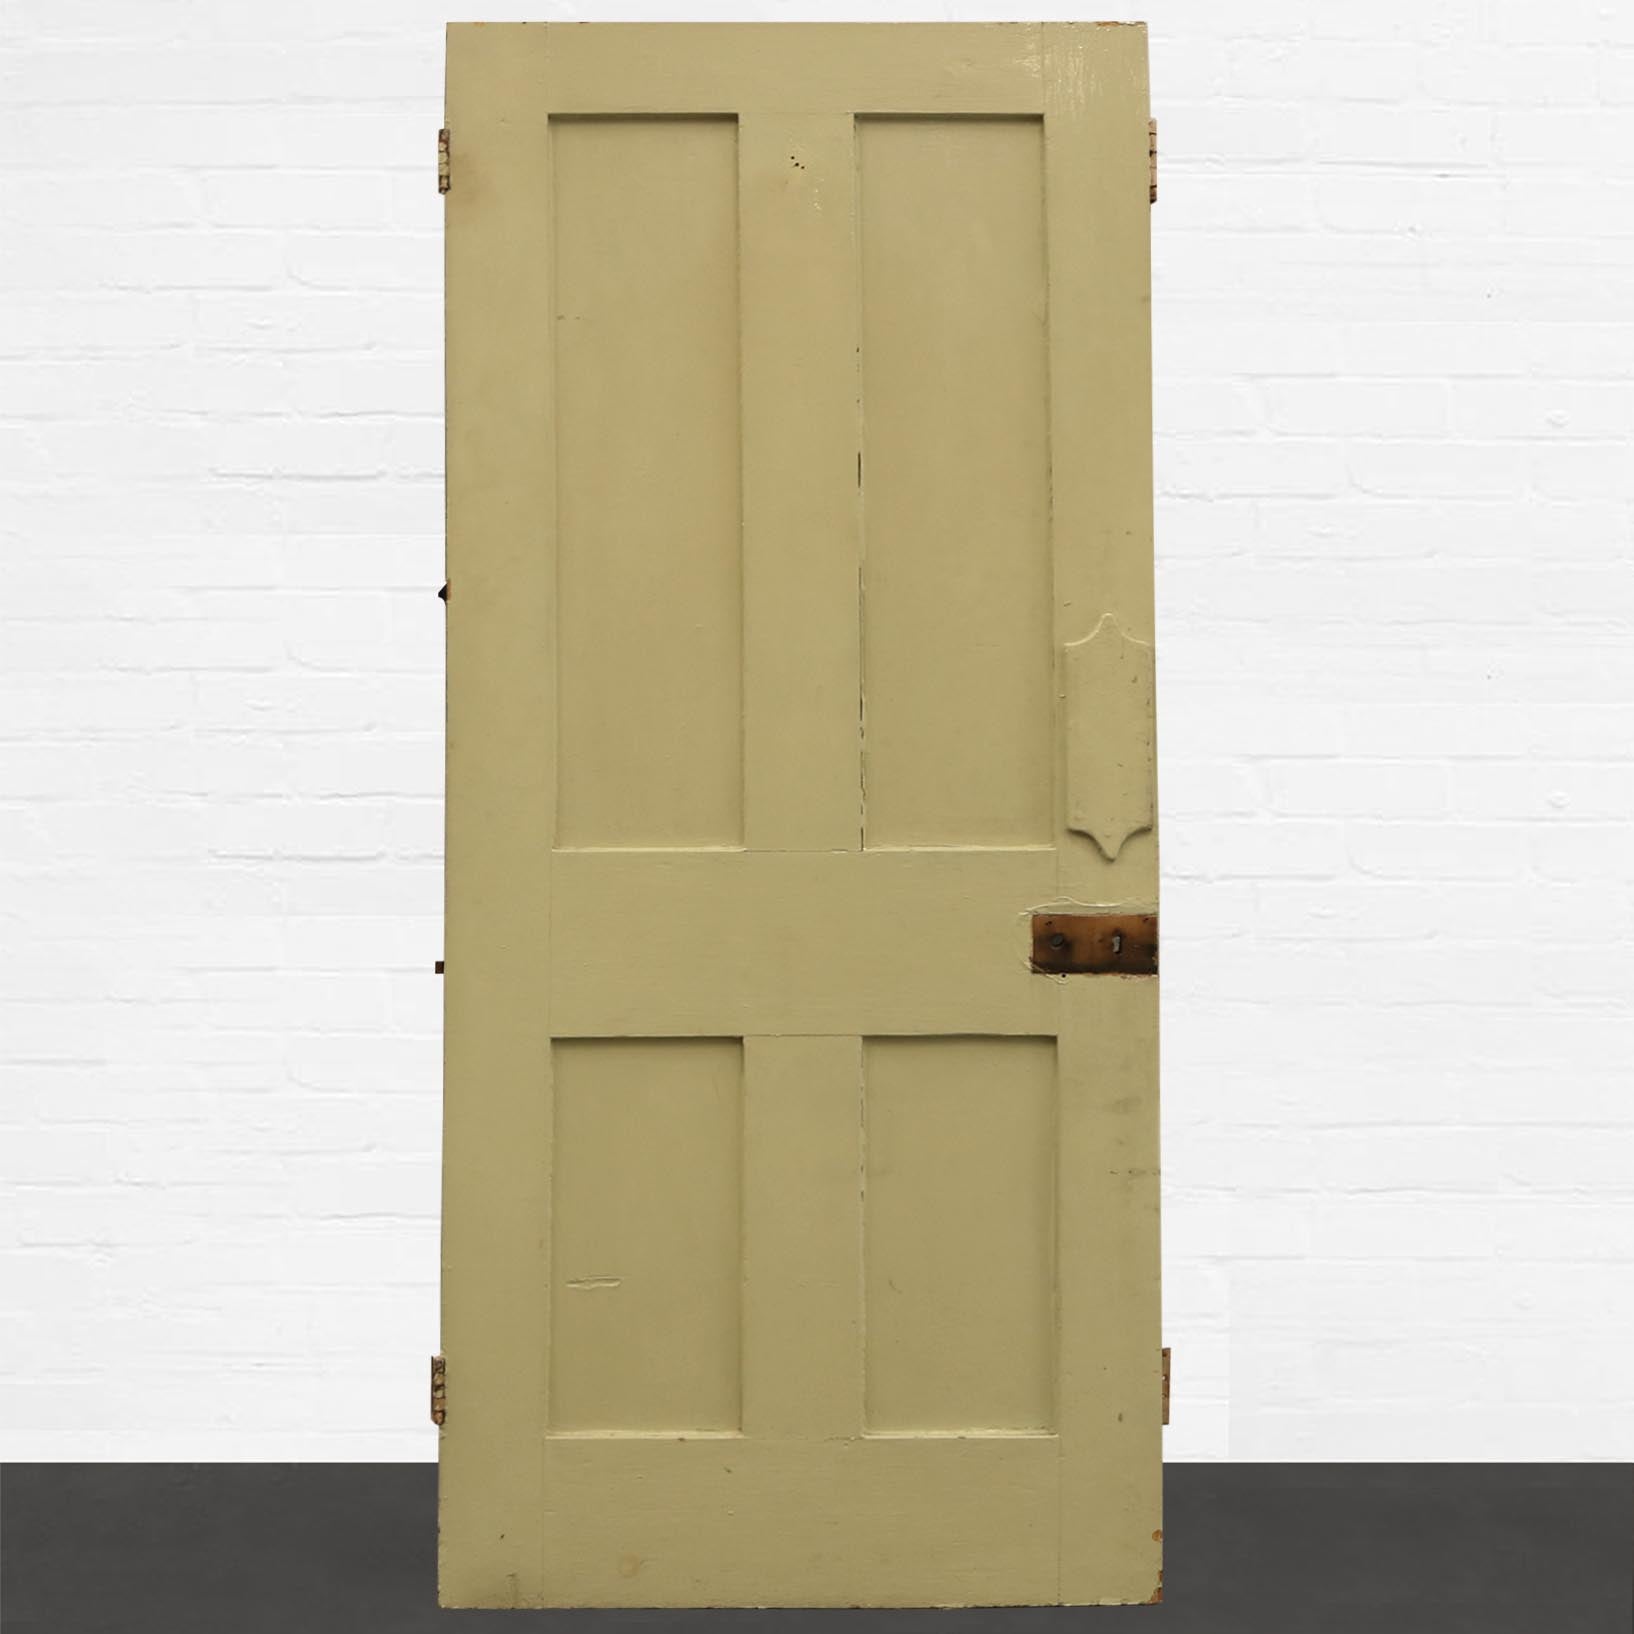 Reclaimed Solid Pine Four Panel Door - 196cm x 74cm | The Architectural Forum